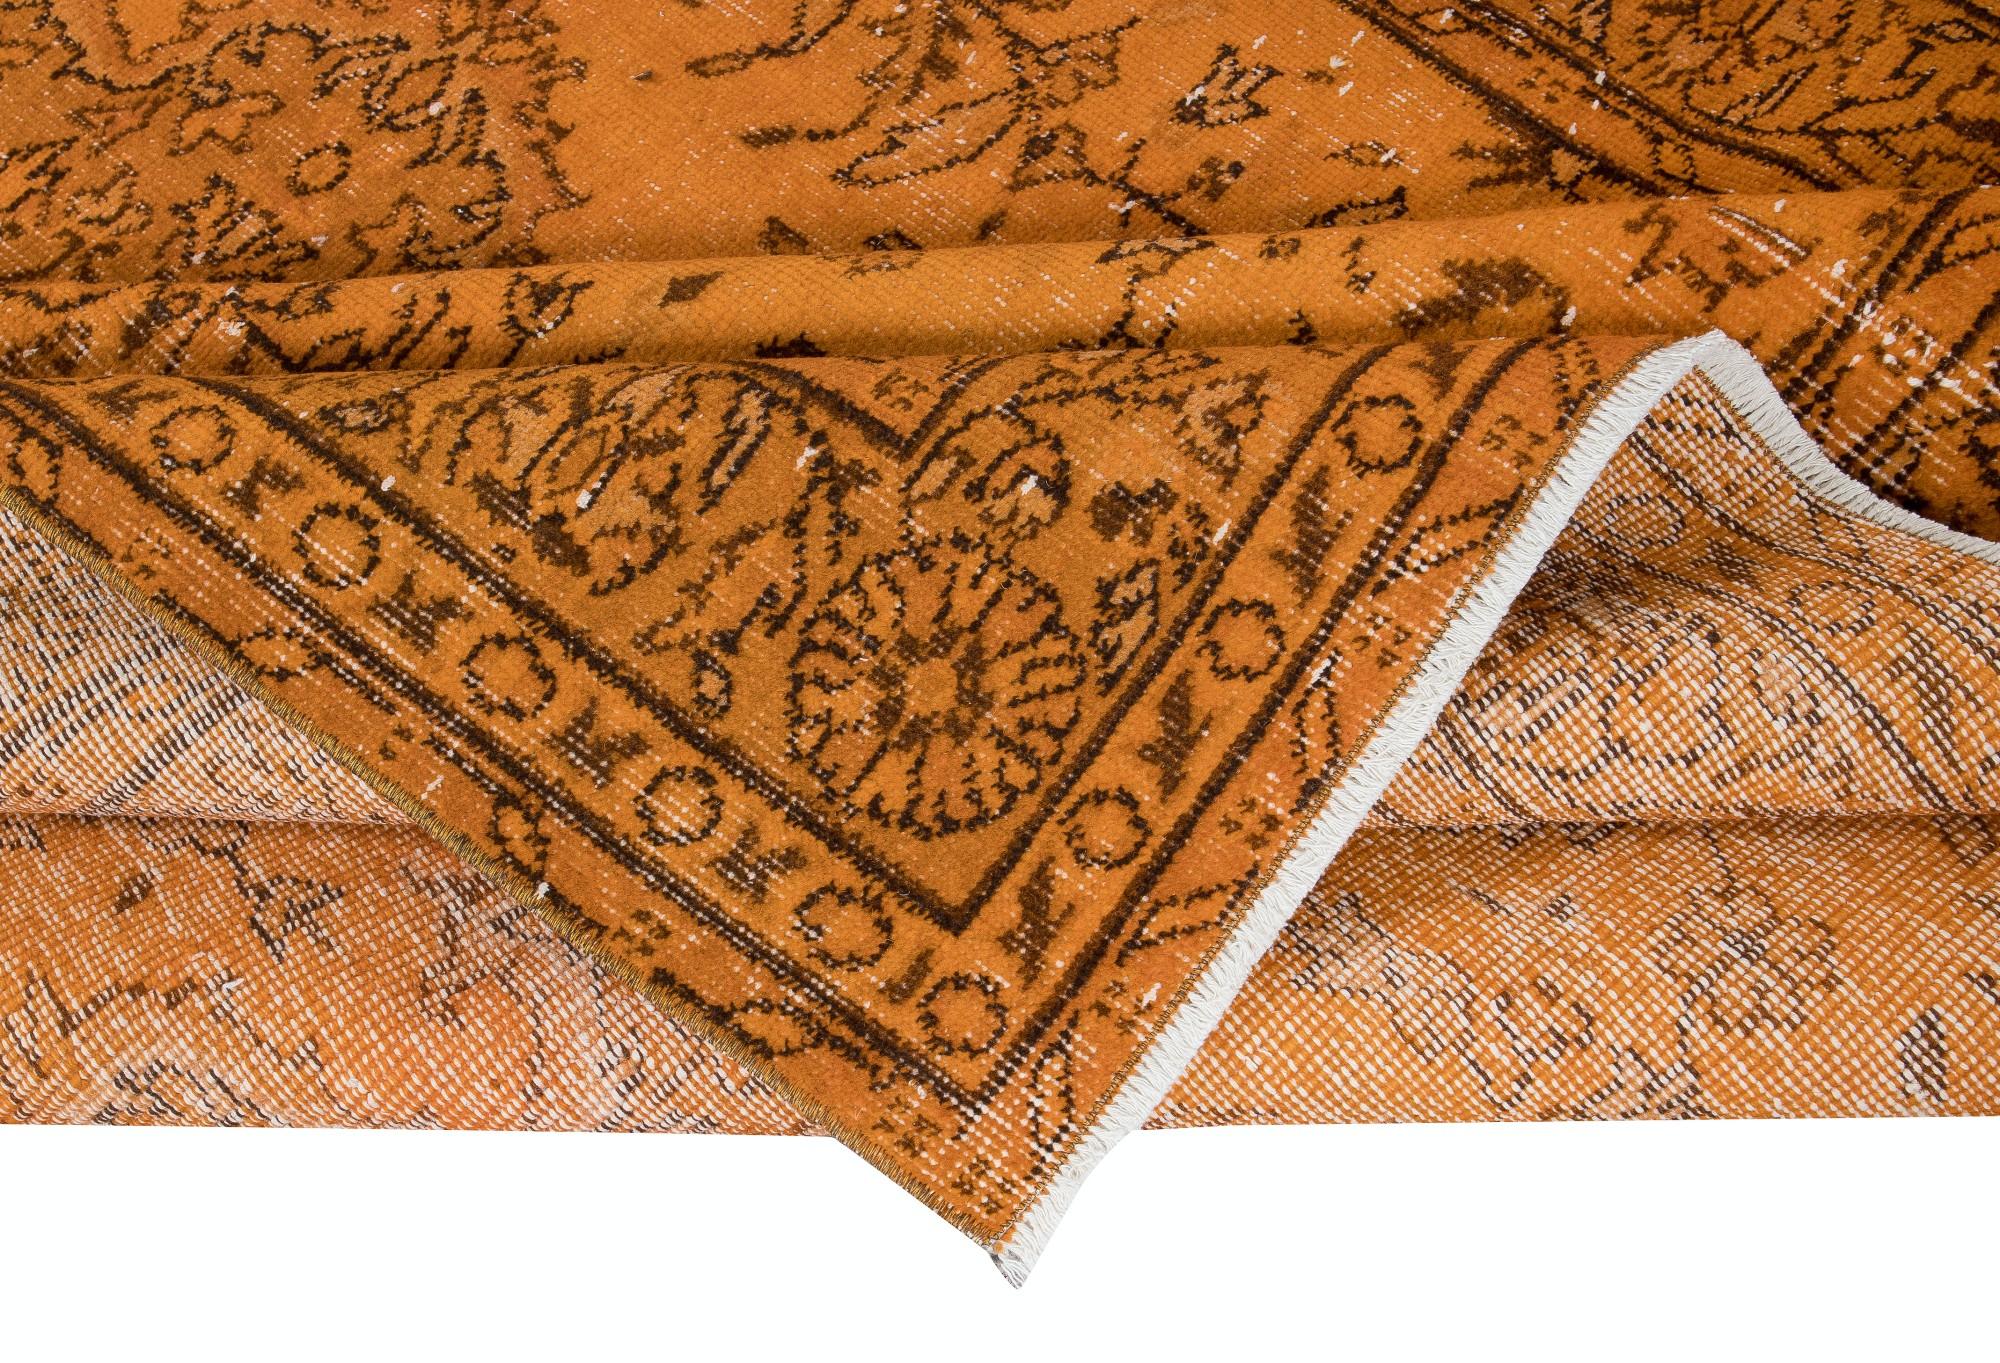 5.7x9 Ft Decorative Turkish Orange Rug, Modern Handmade Wool Carpet In Good Condition For Sale In Philadelphia, PA